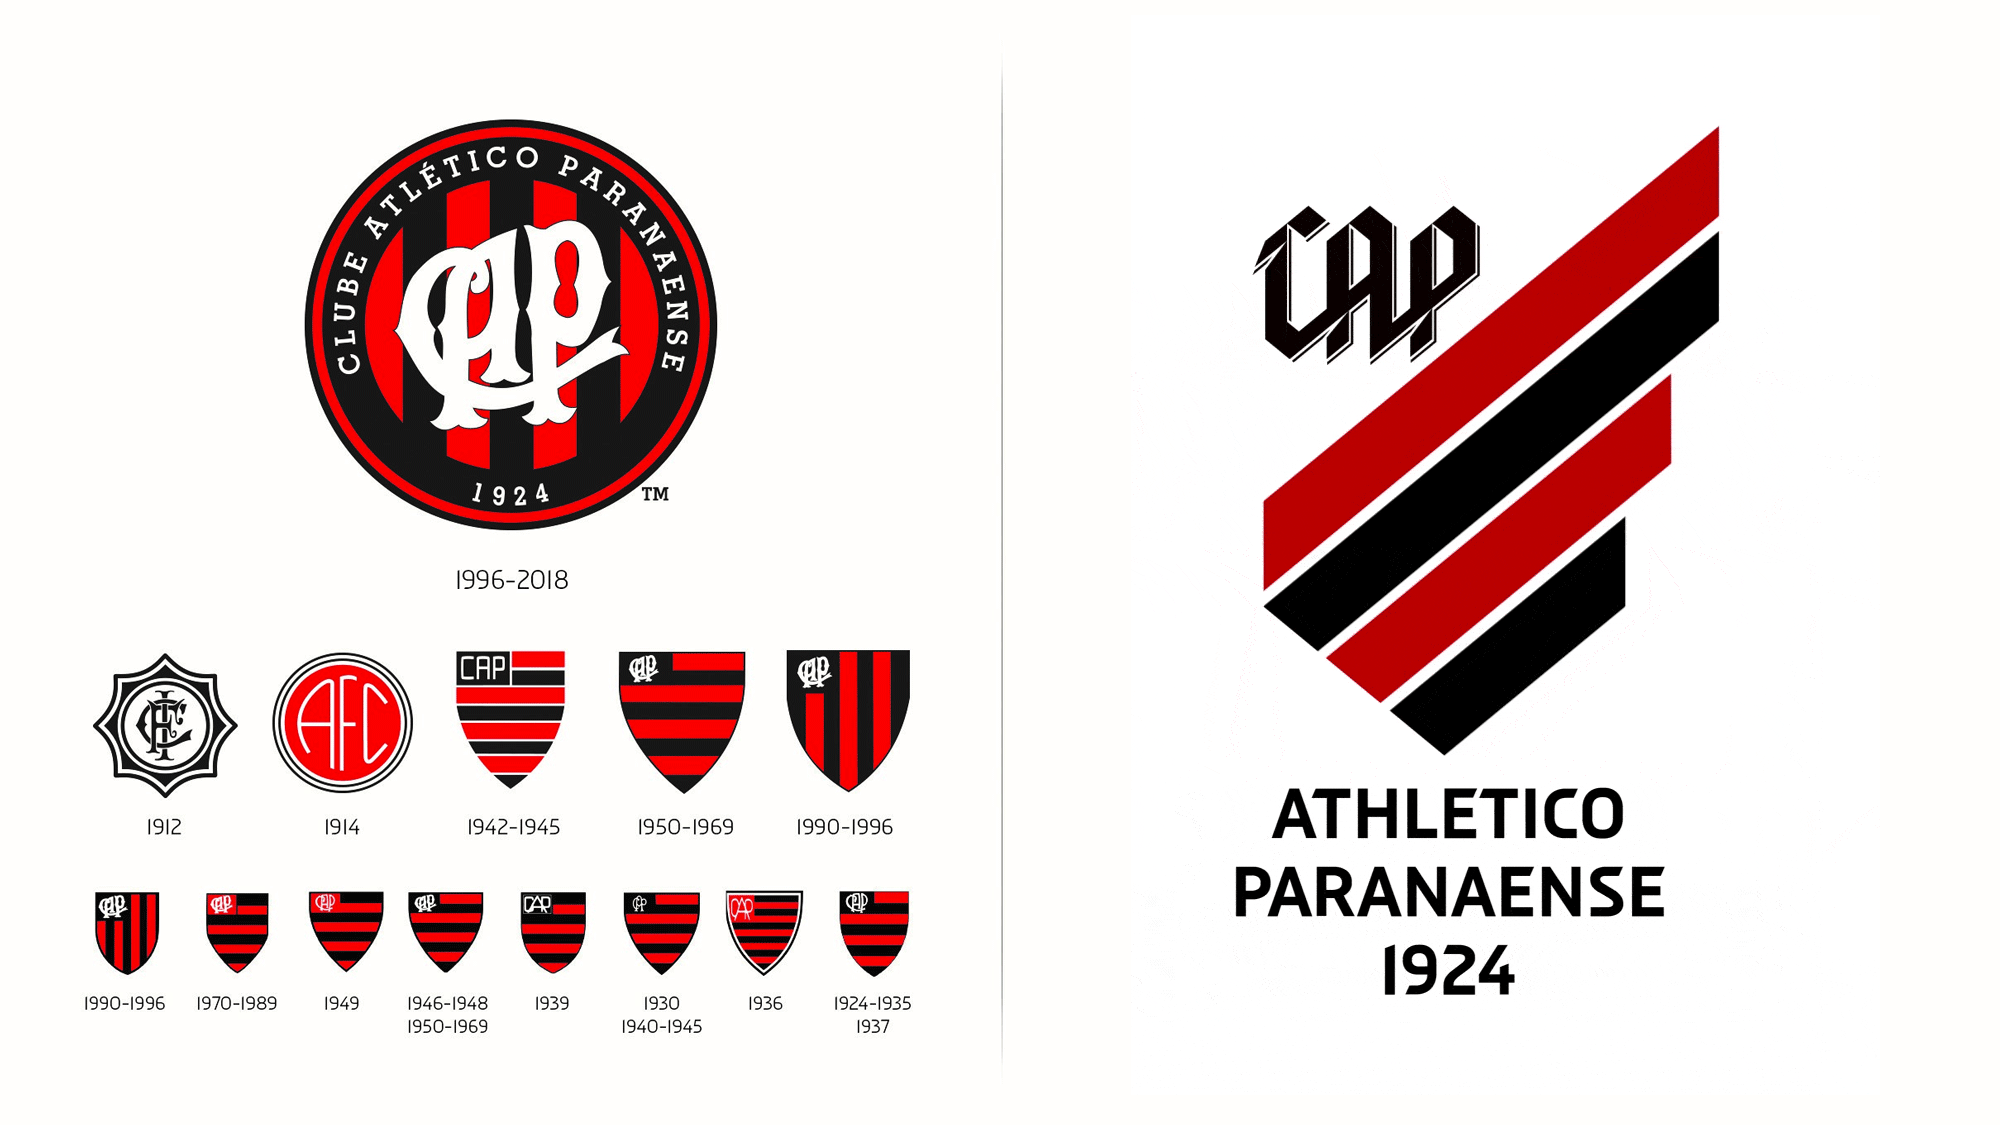 Oz Logo - Brand New: New Logo and Identity for Club Athletico Paranaense by Oz